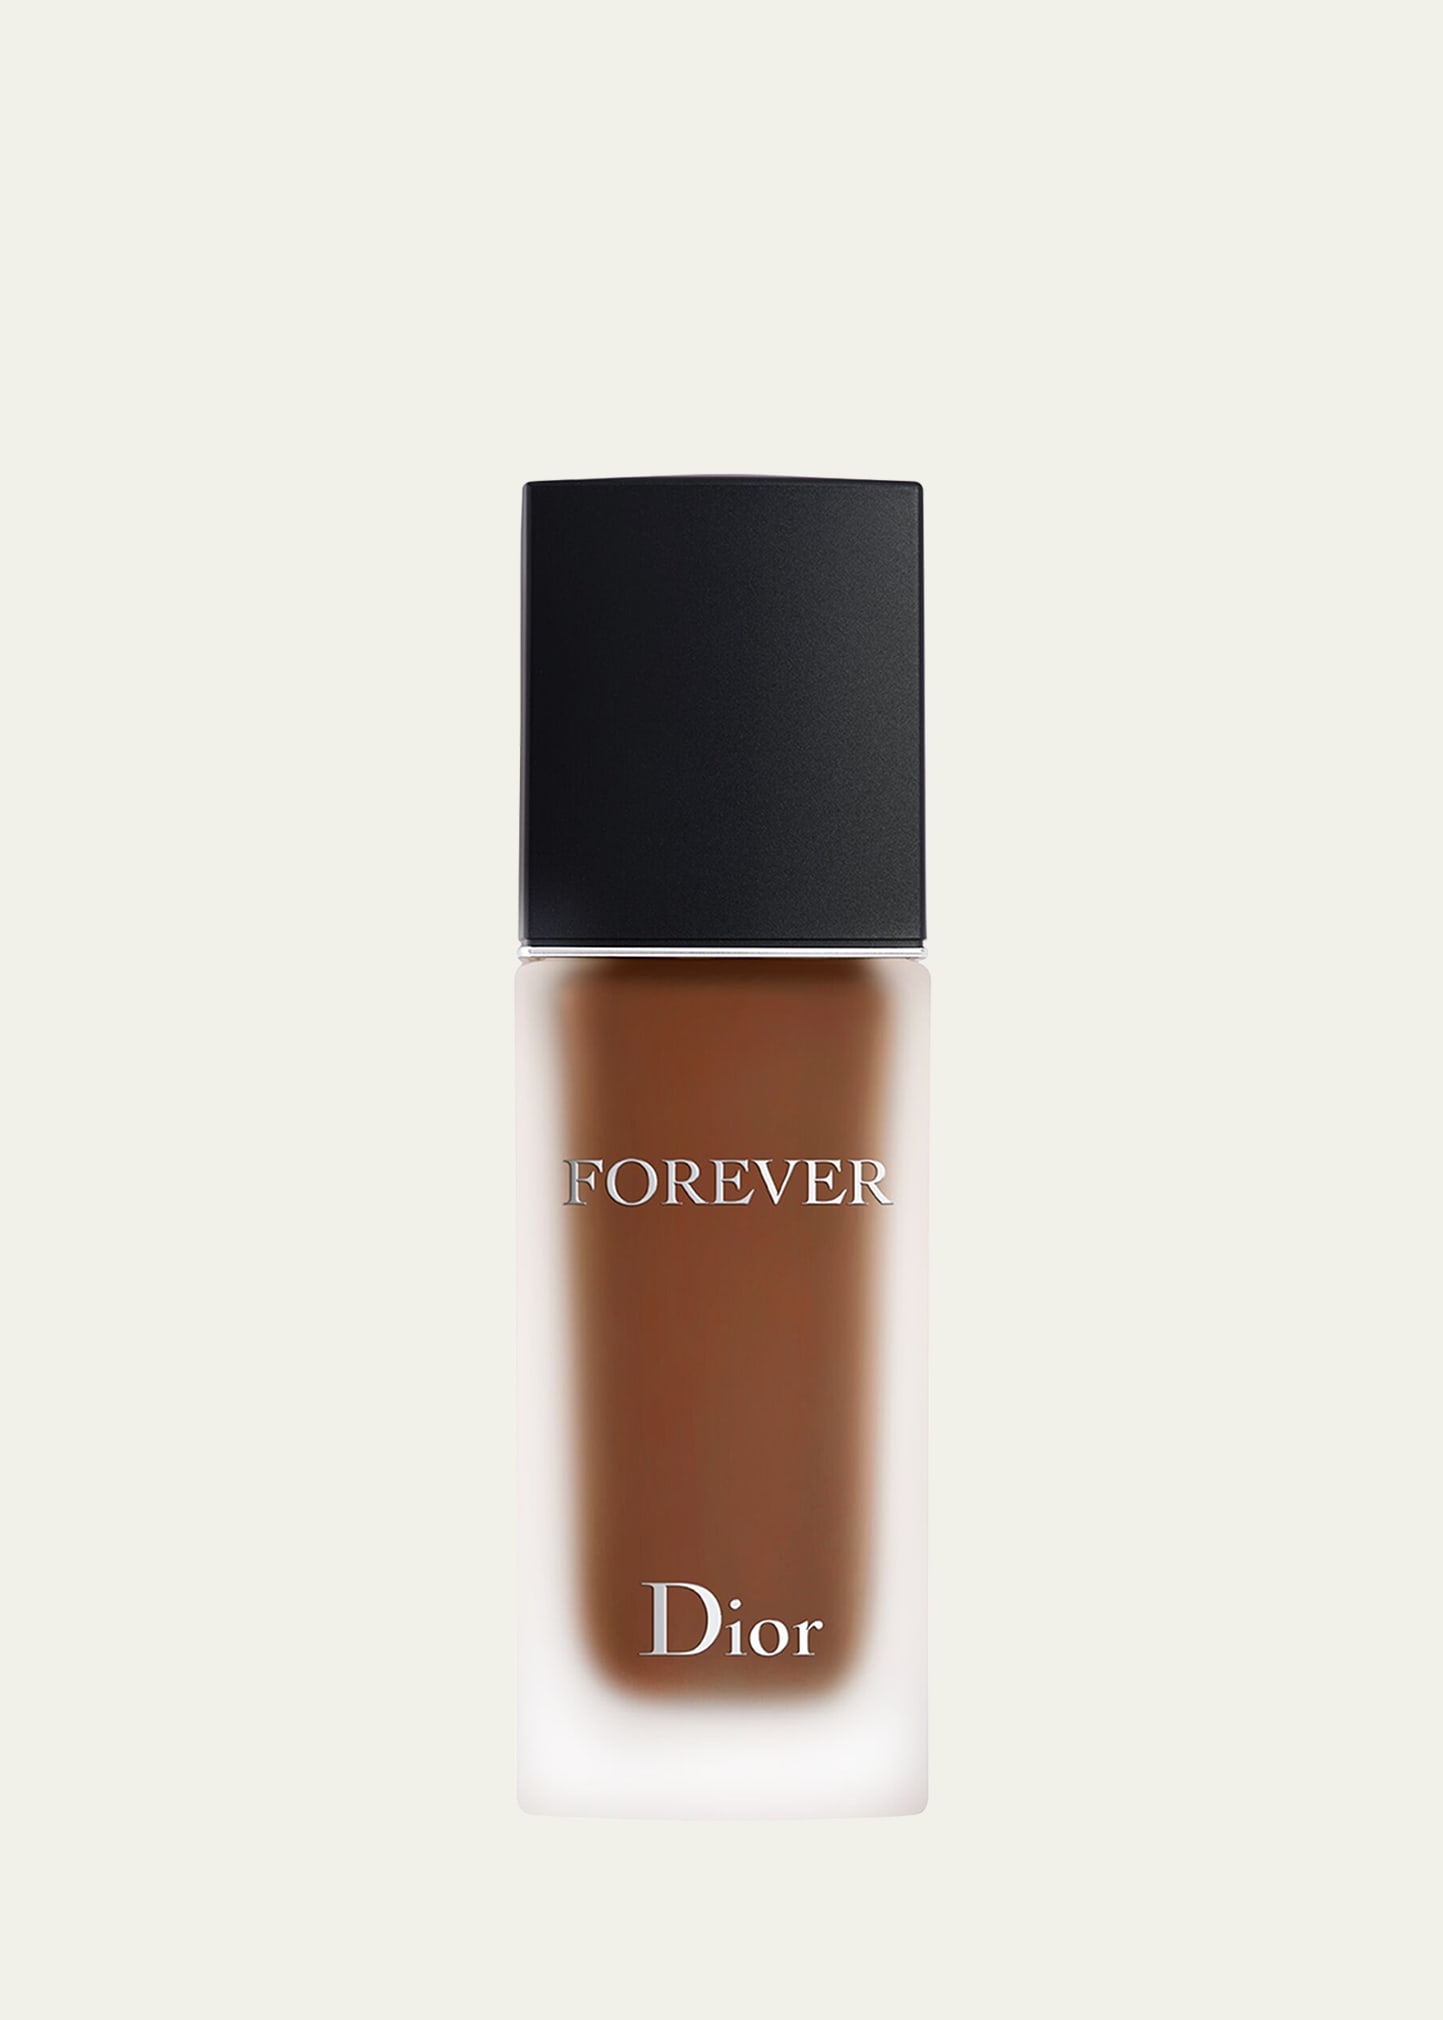 Dior 1 Oz. Forever Matte Skincare Foundation Spf 15 In 8 Neutral